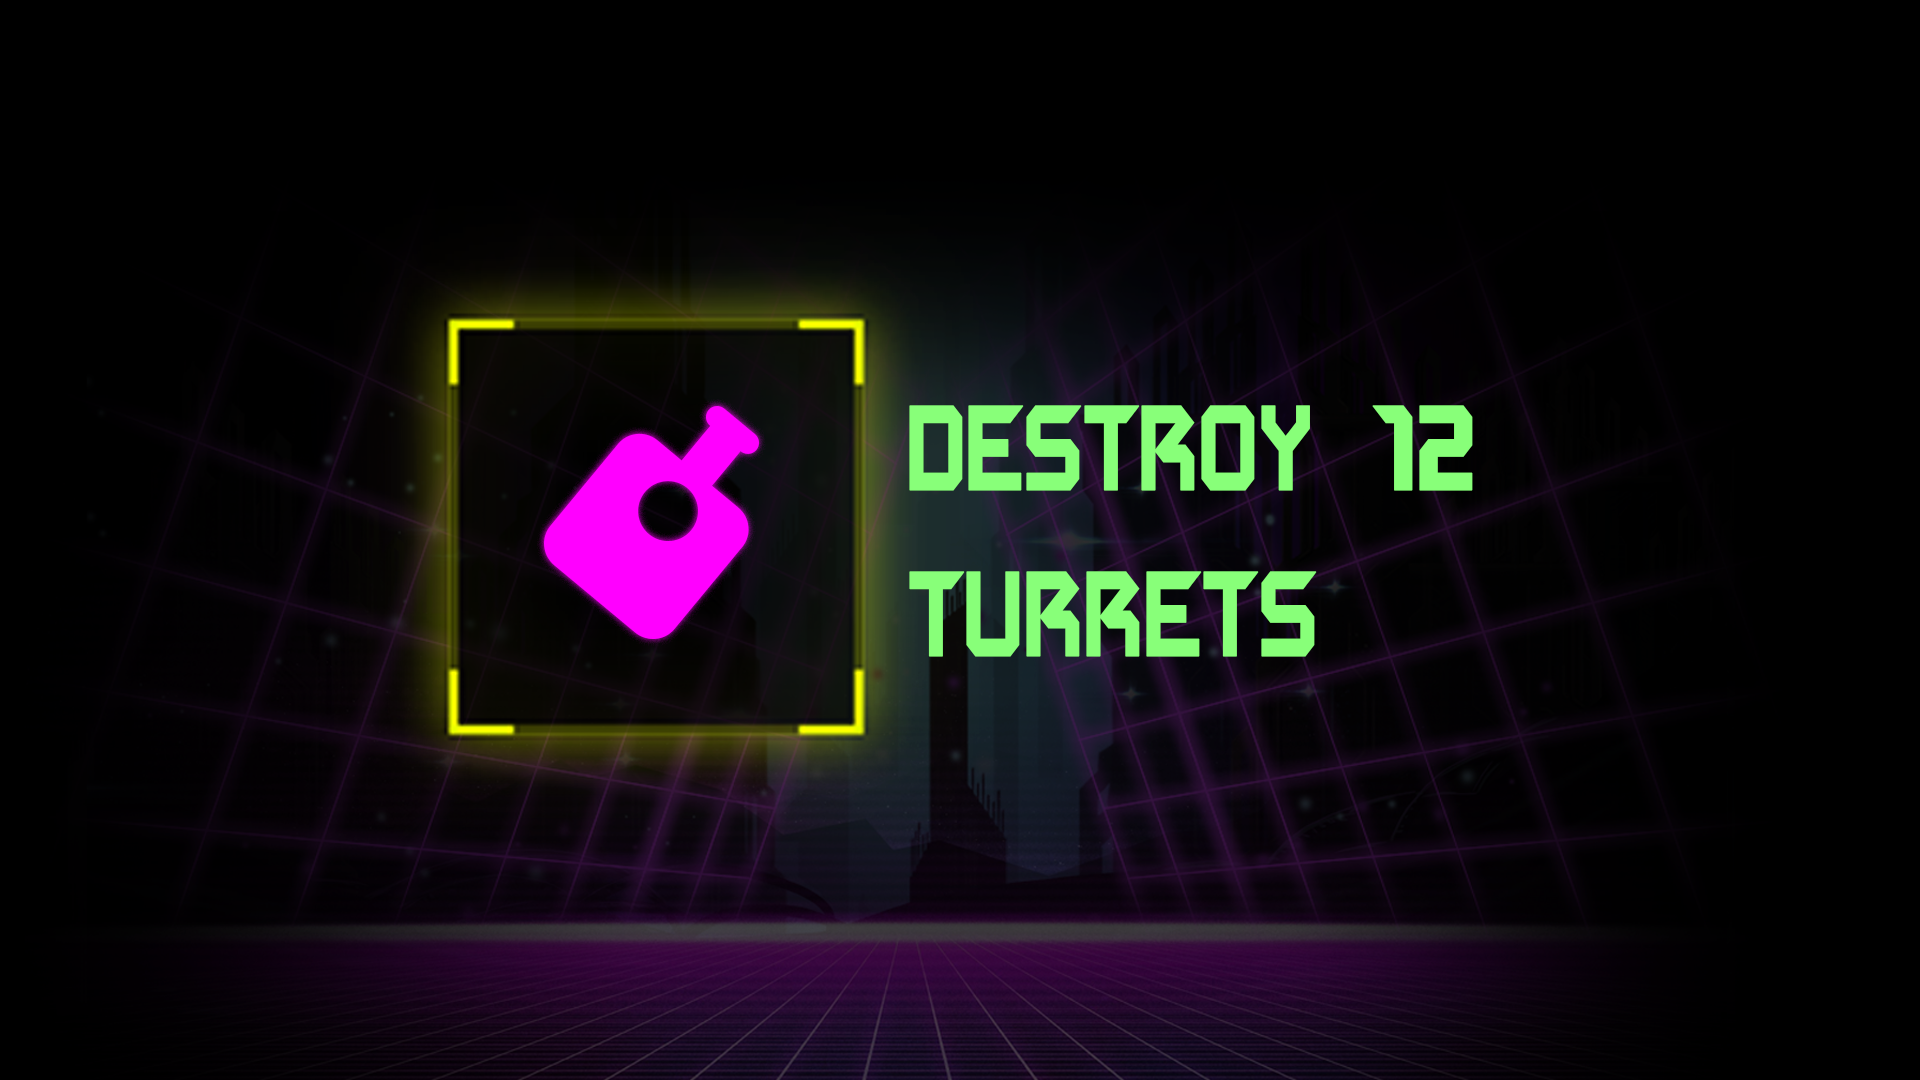 Destroy 12 turrets